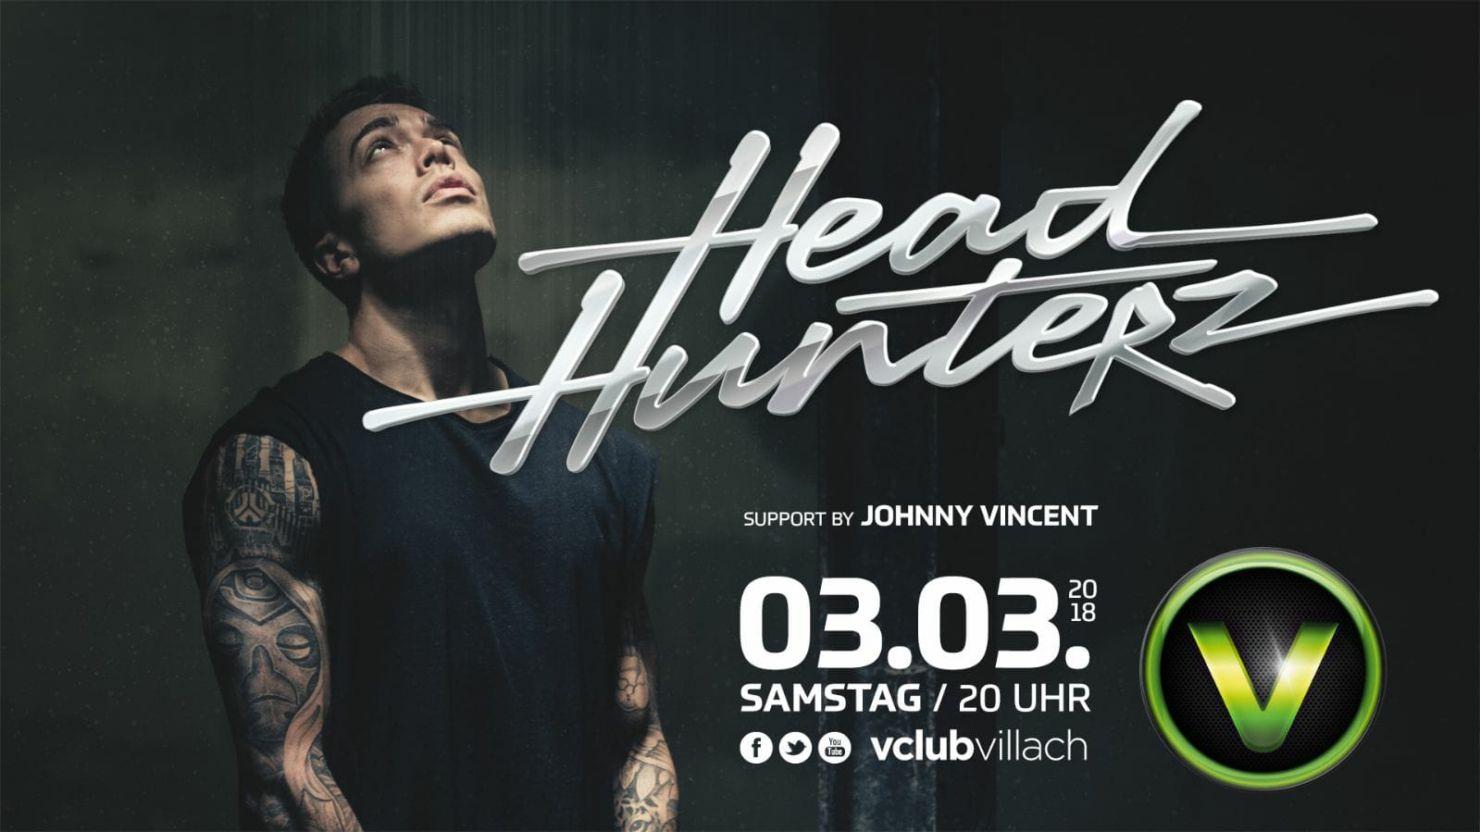 Headhunterz LIVE – Support by Johnny Vincent im V-Club Villach